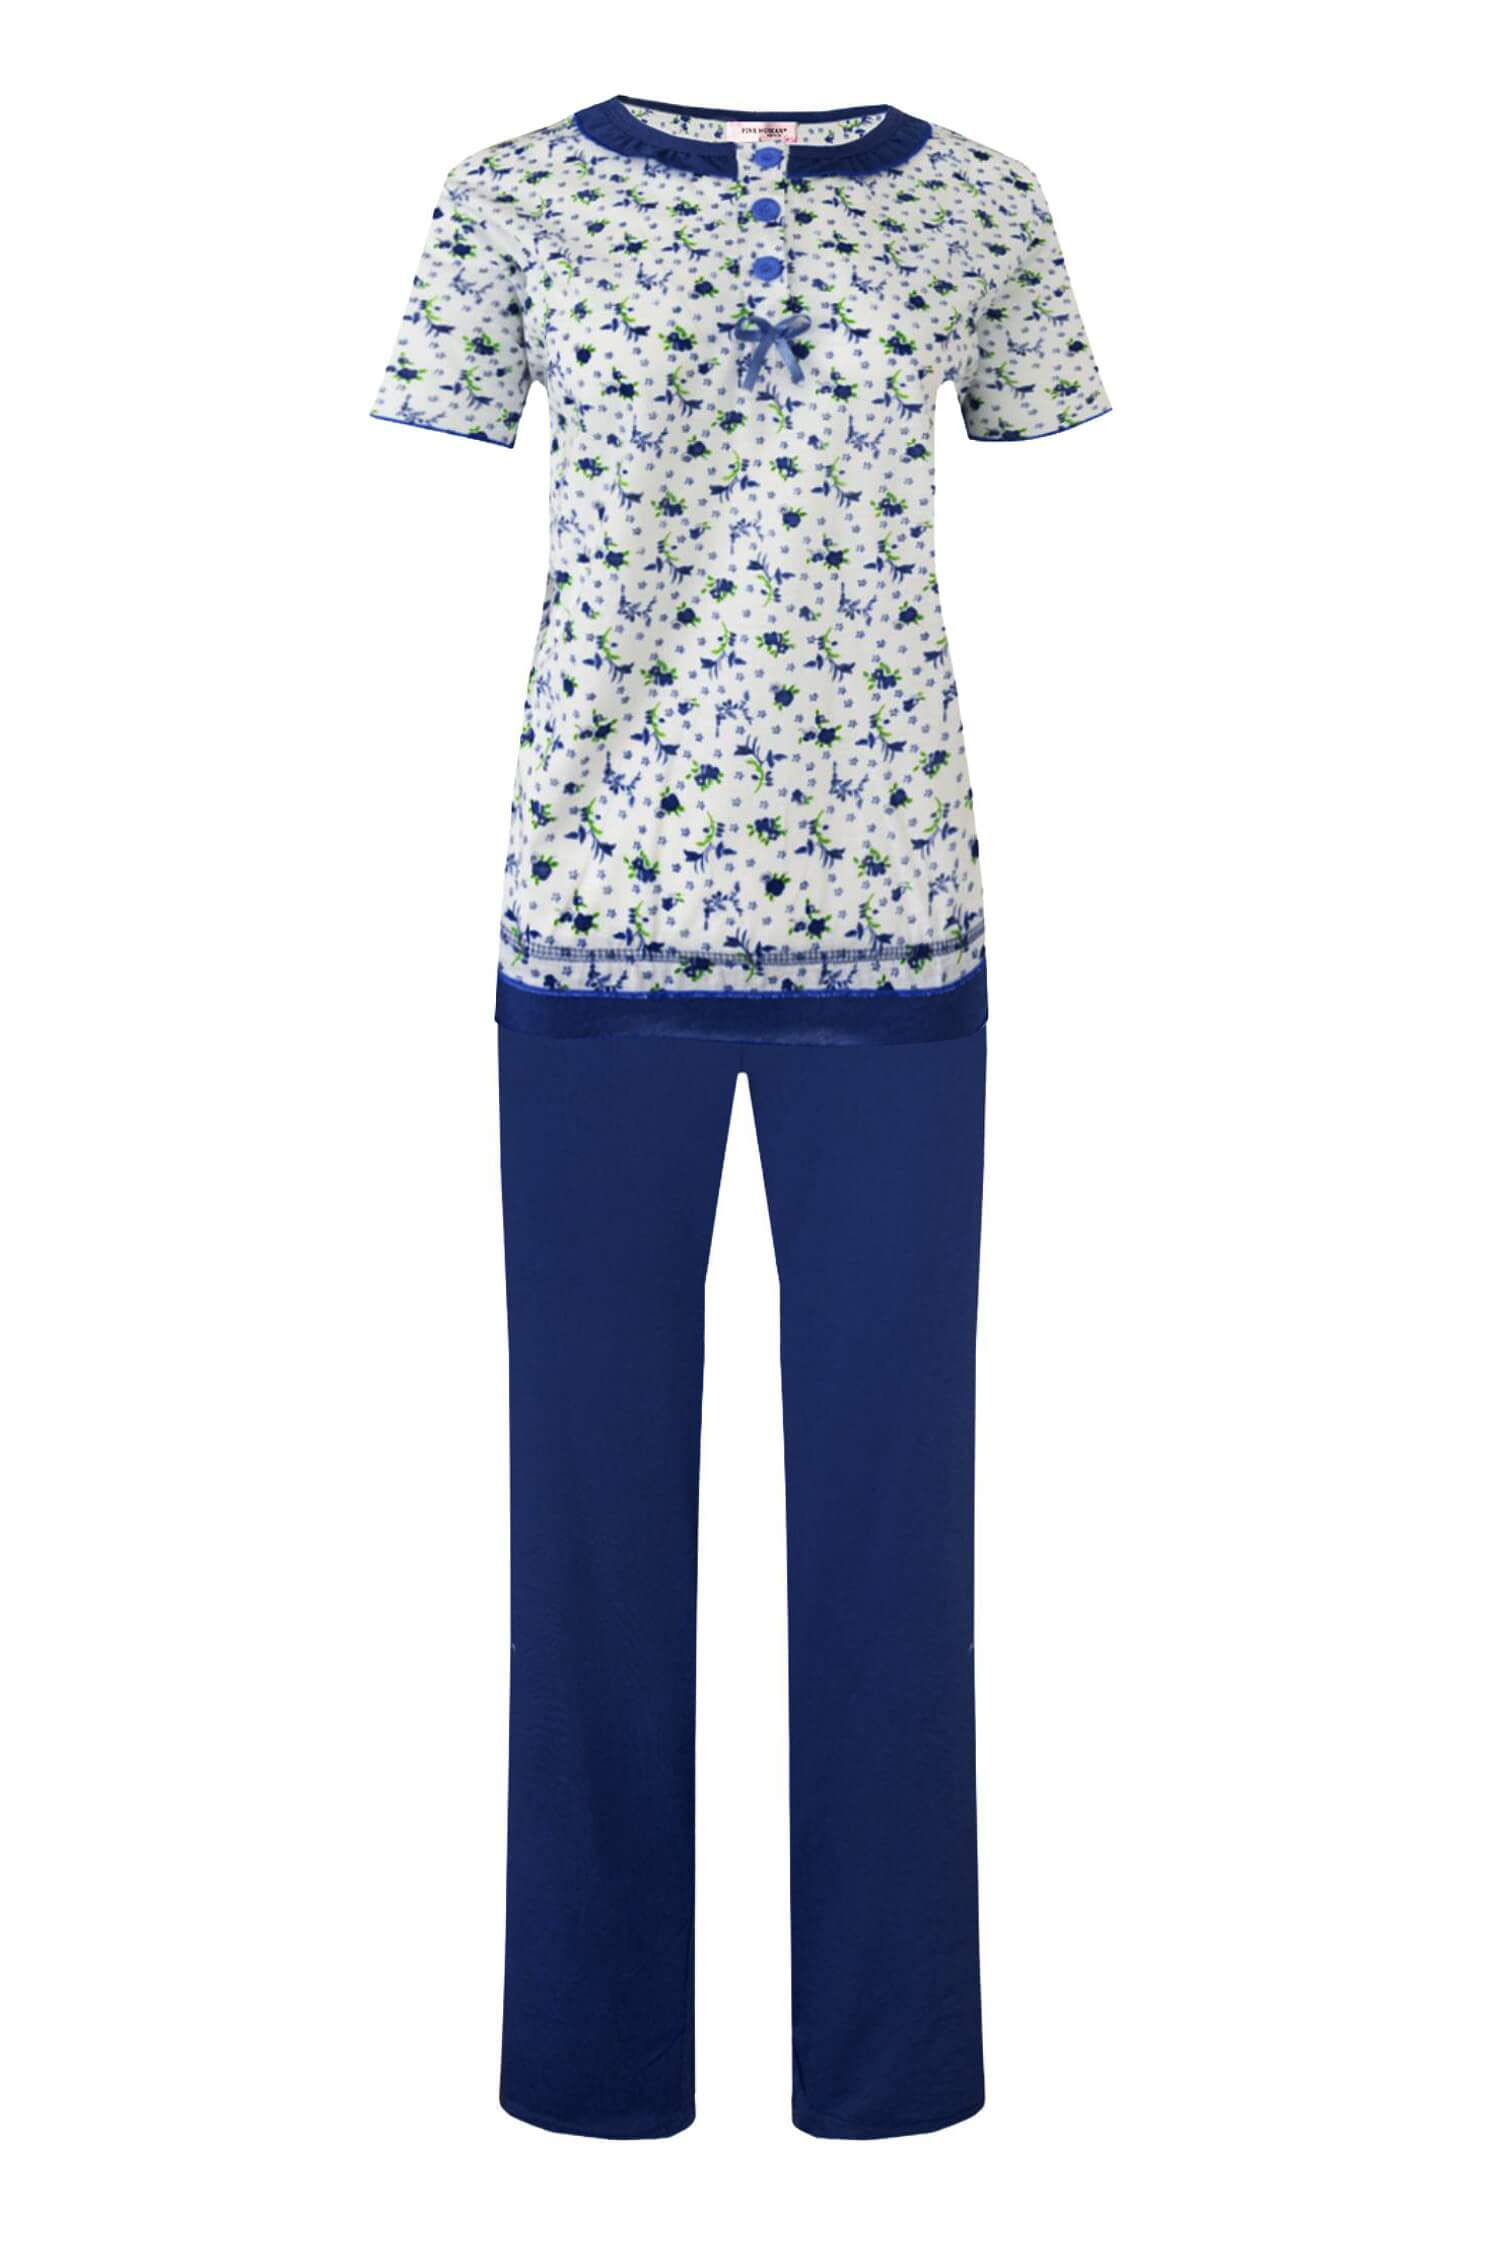 Astrid dámské pyžamo krátký rukáv 2201 XL tmavě modrá